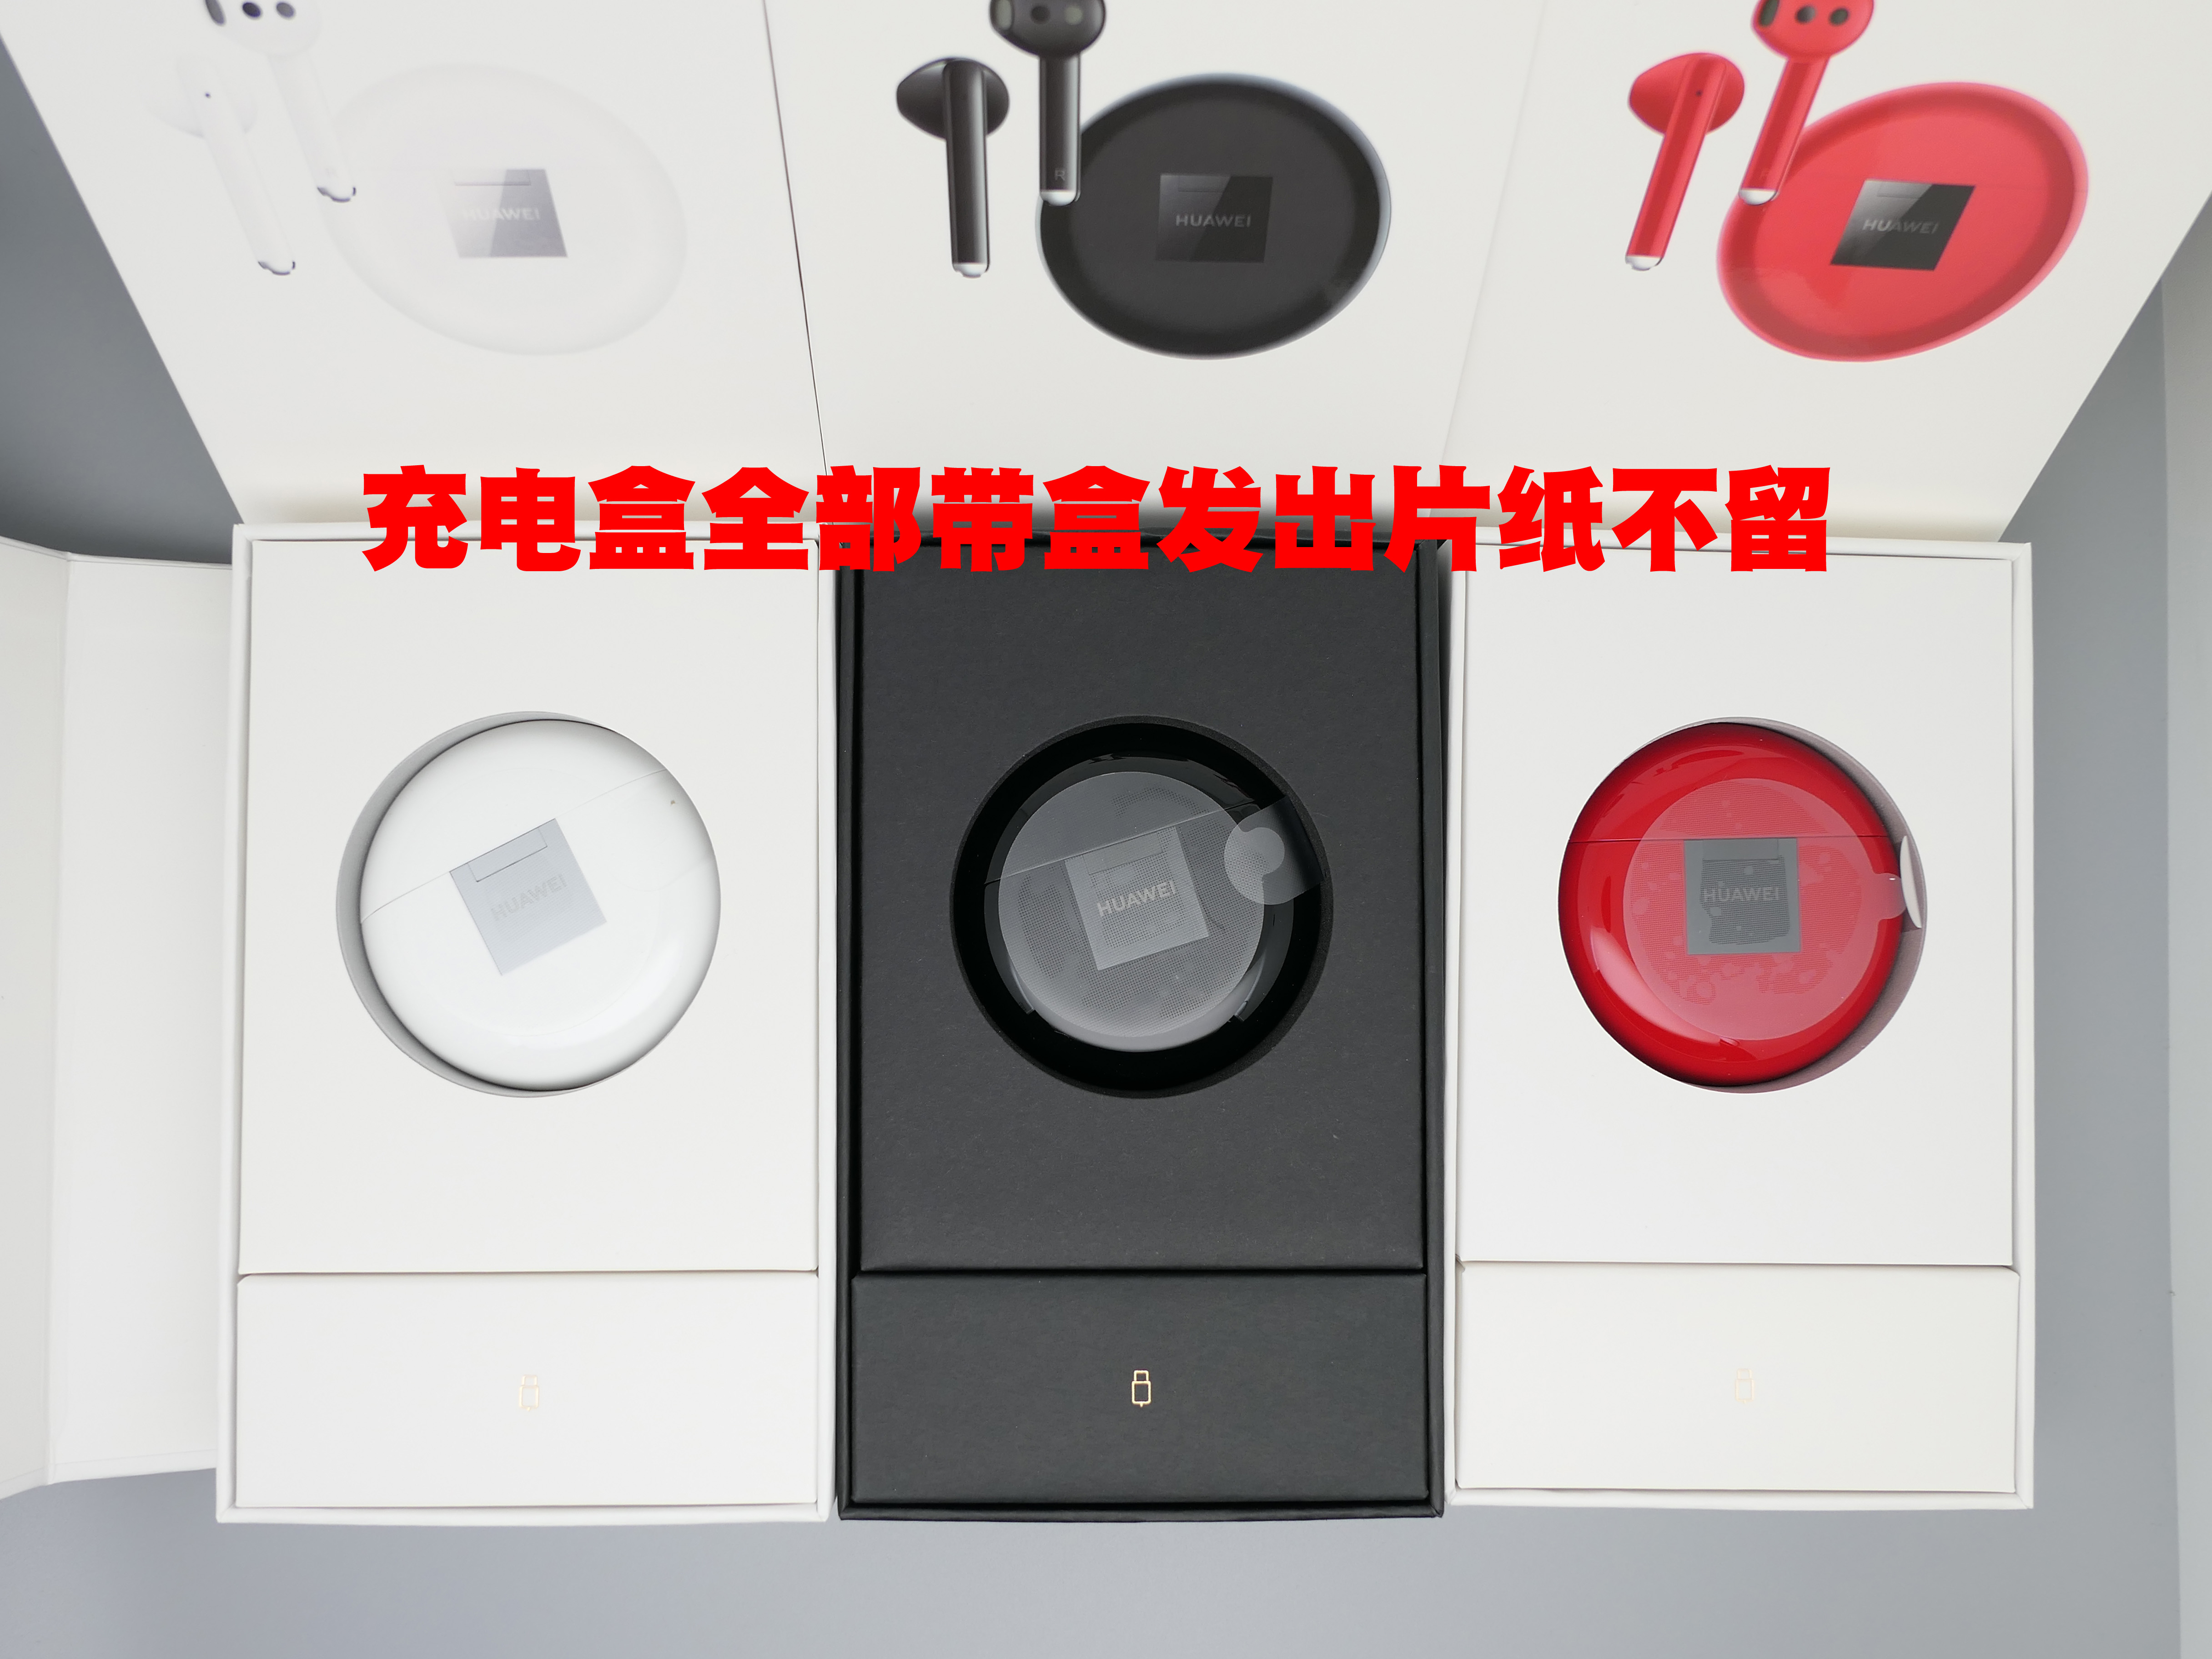 Huawei/华为 FreeBuds 3 无线耳机单只左耳右耳充电仓盒原装配件